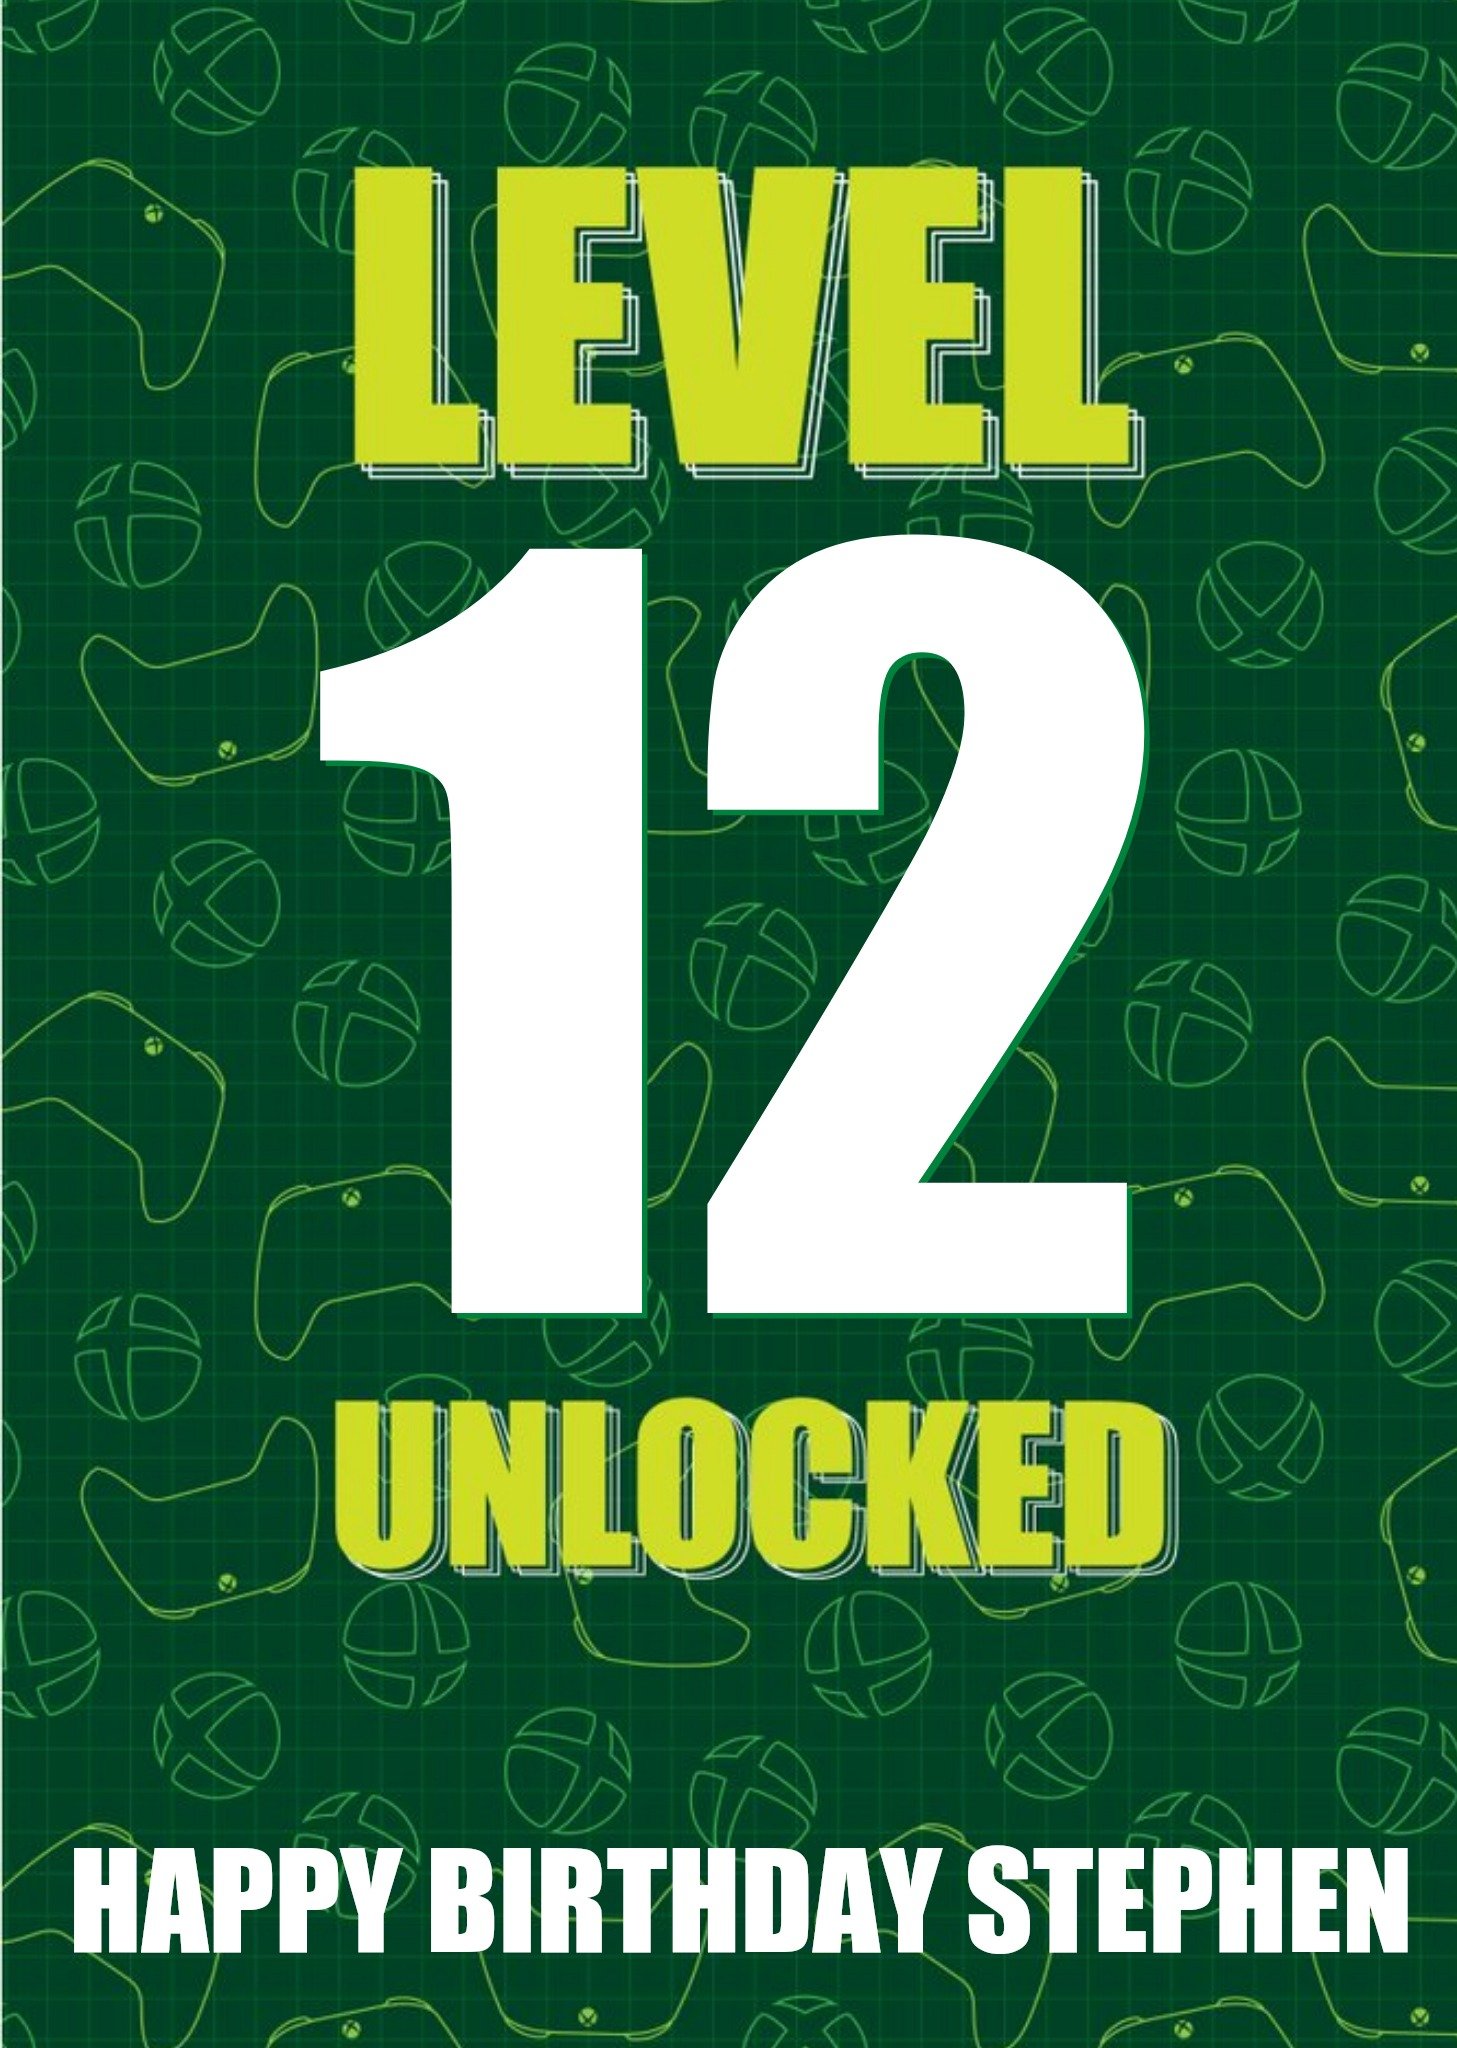 Moonpig Xbox Level Unlocked Birthday Card, Large